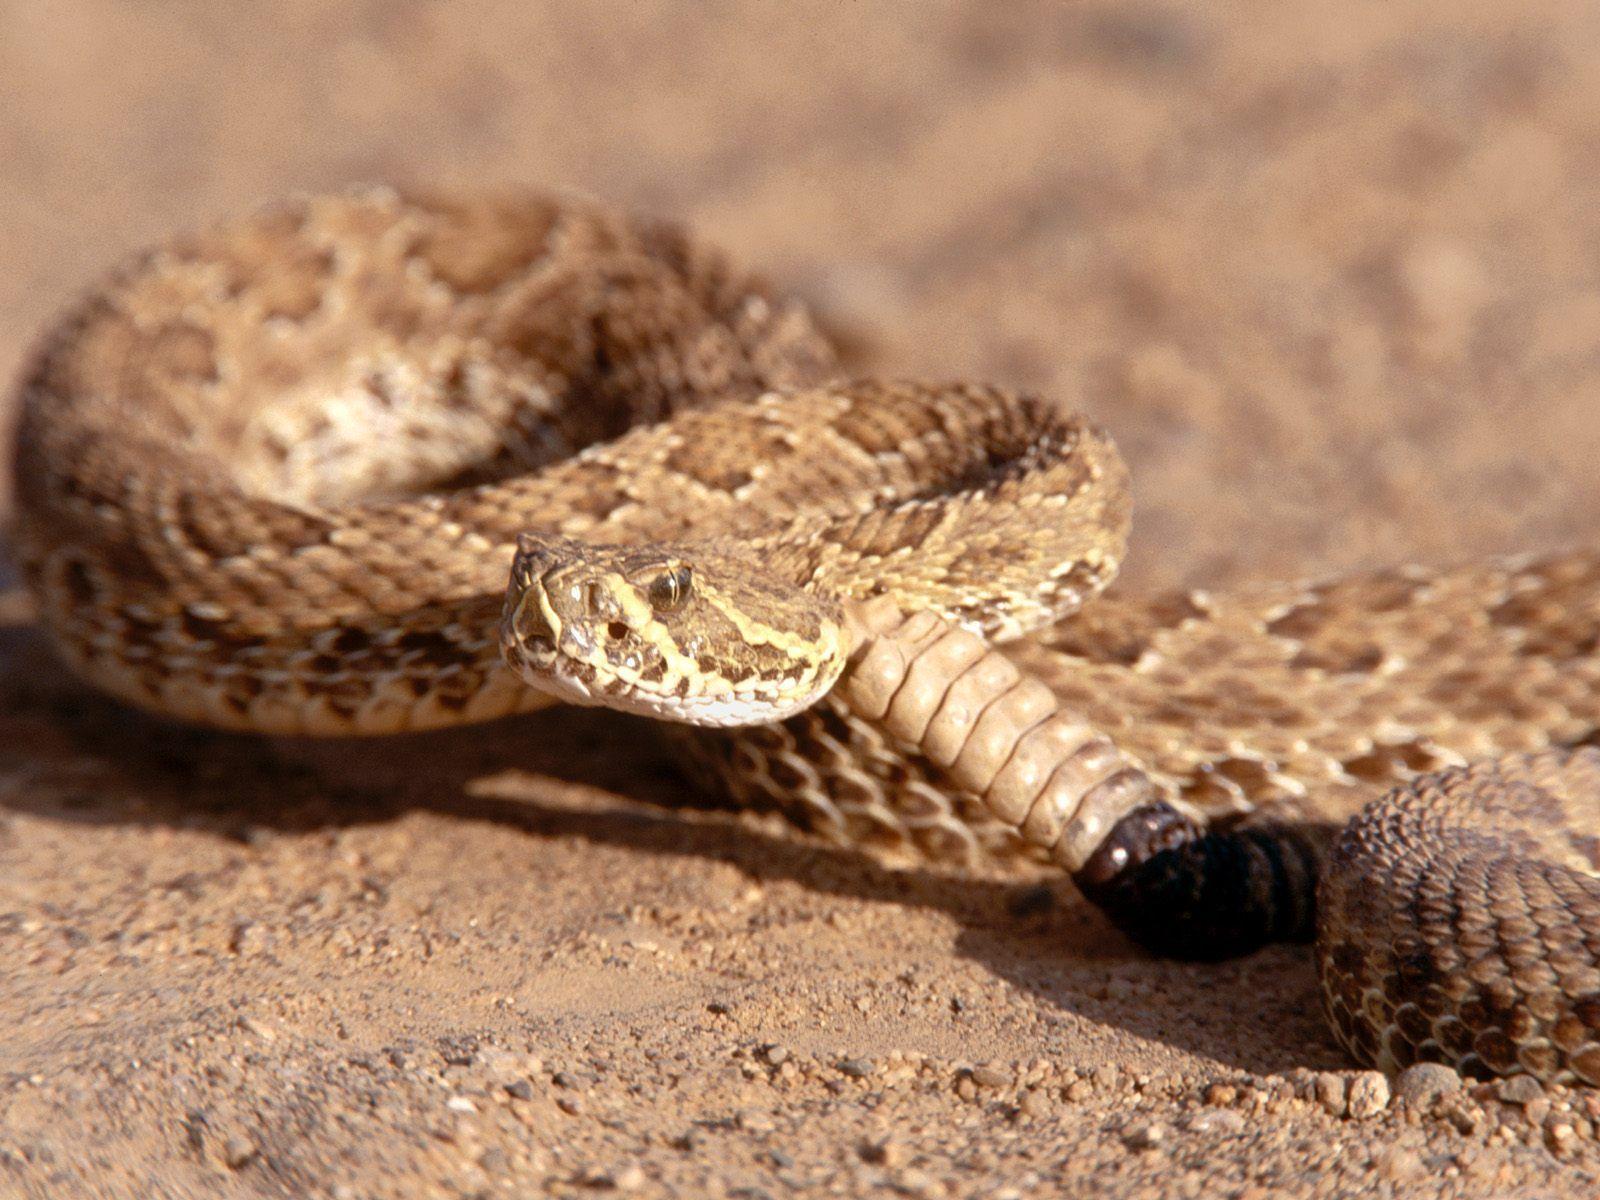 Rattlesnake HD Wallpaper. Rattlesnake Picture, Image. Cool